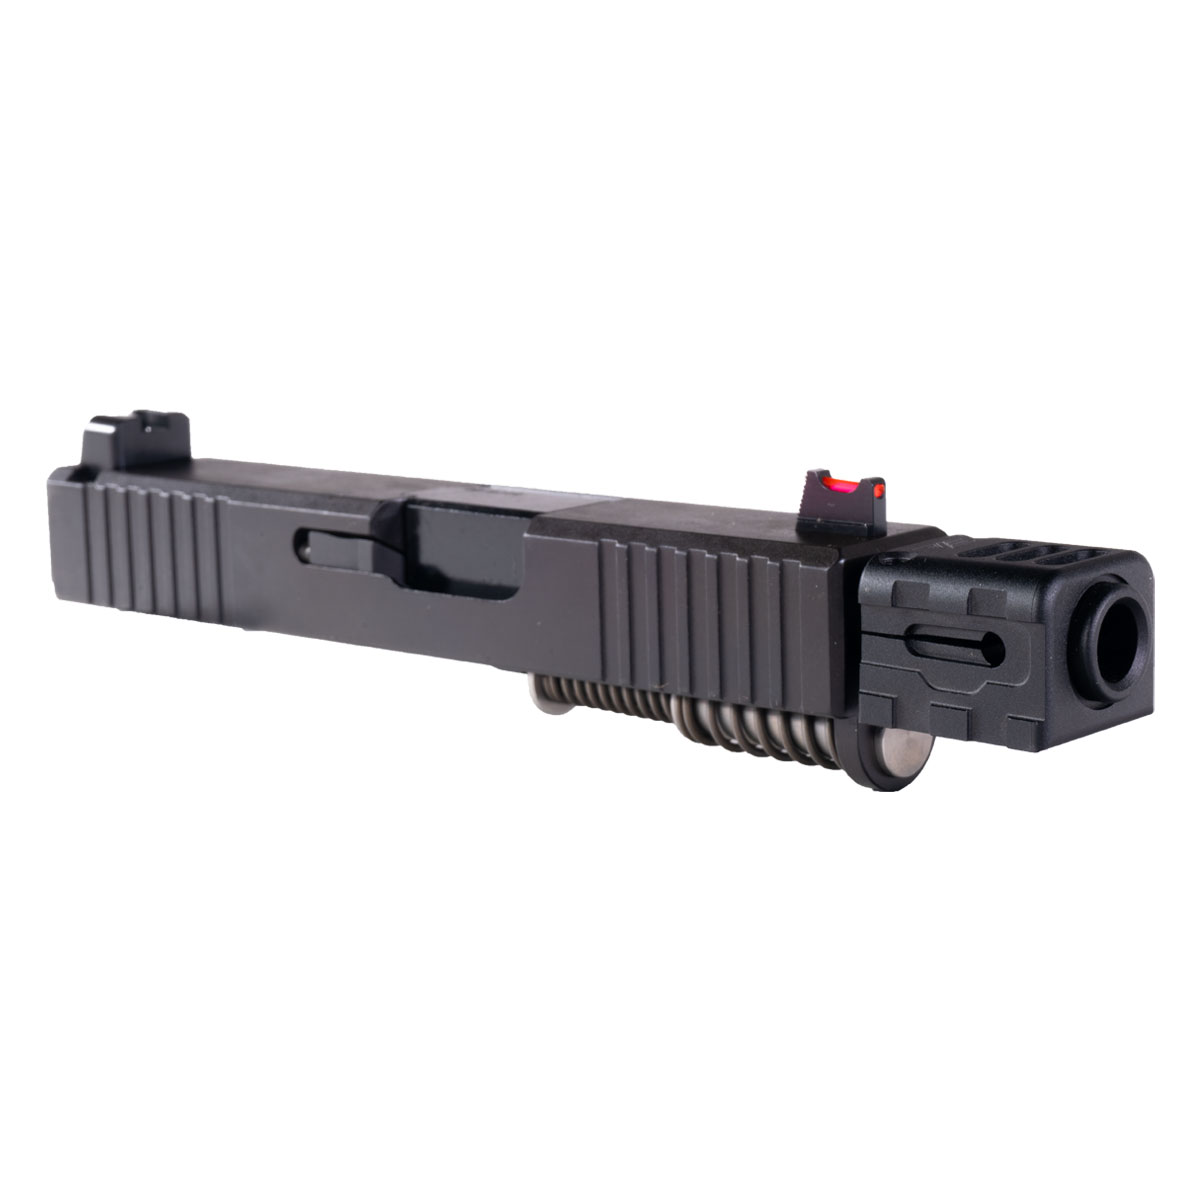 MMC 'Pyknic w/ Sylvan Arms Compensator' 9mm Complete Slide Kit - Glock 26 Gen 1-2 Compatible